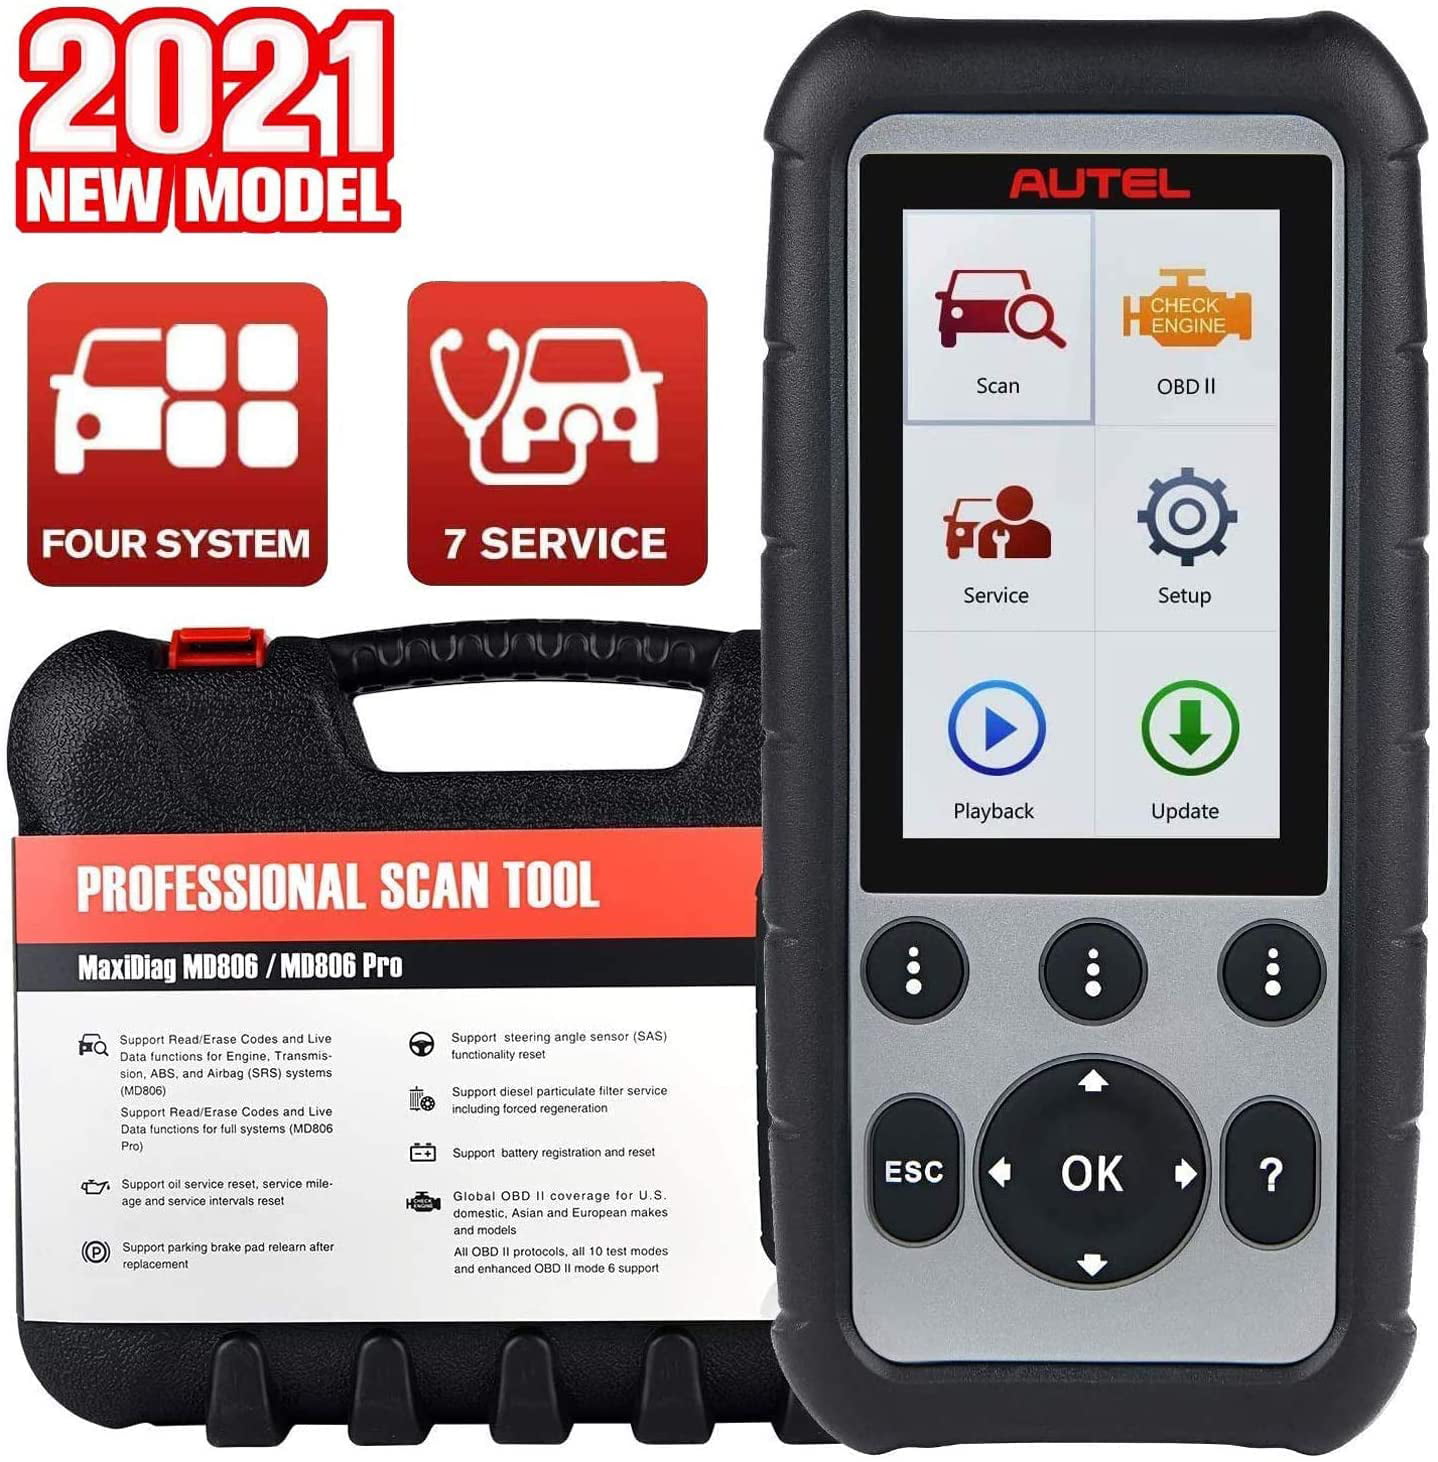 2021 LAUNCH CR629 OBD2 ABS SRS Diagnostic Bidirectional Scanner Car Code Reader